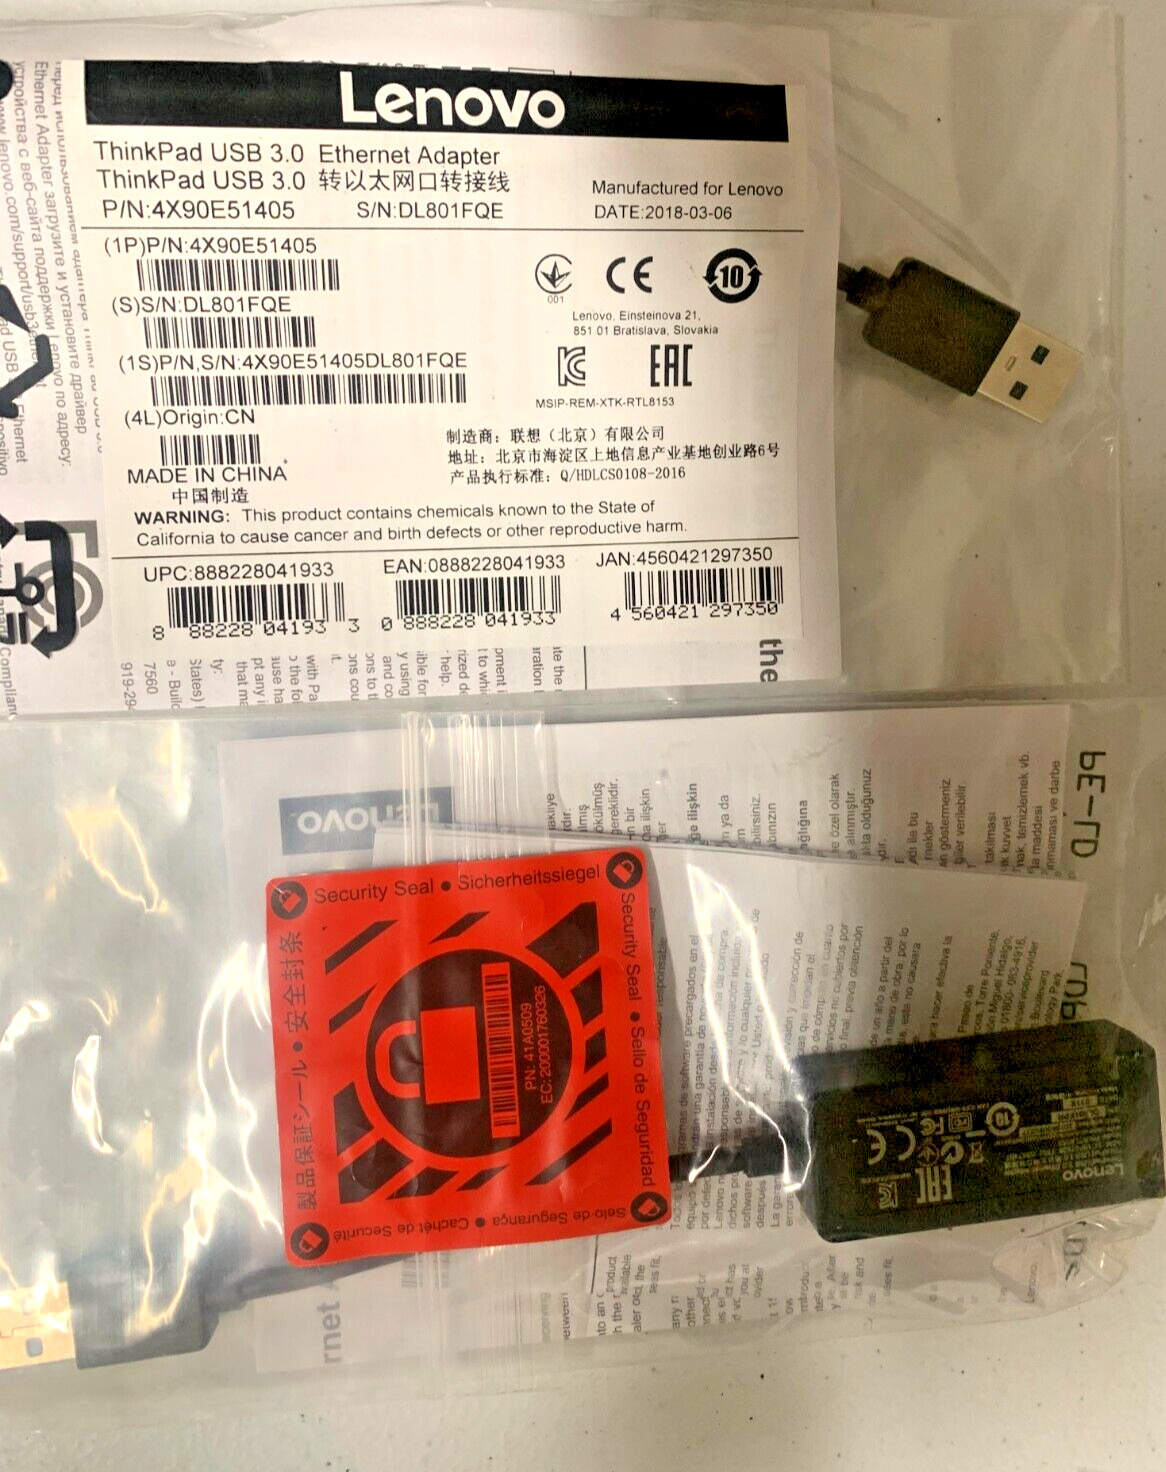 NEW Lenovo 4X90E5405 USB 3.0 to Ethernet Adapter RJ-45 4X90E51405